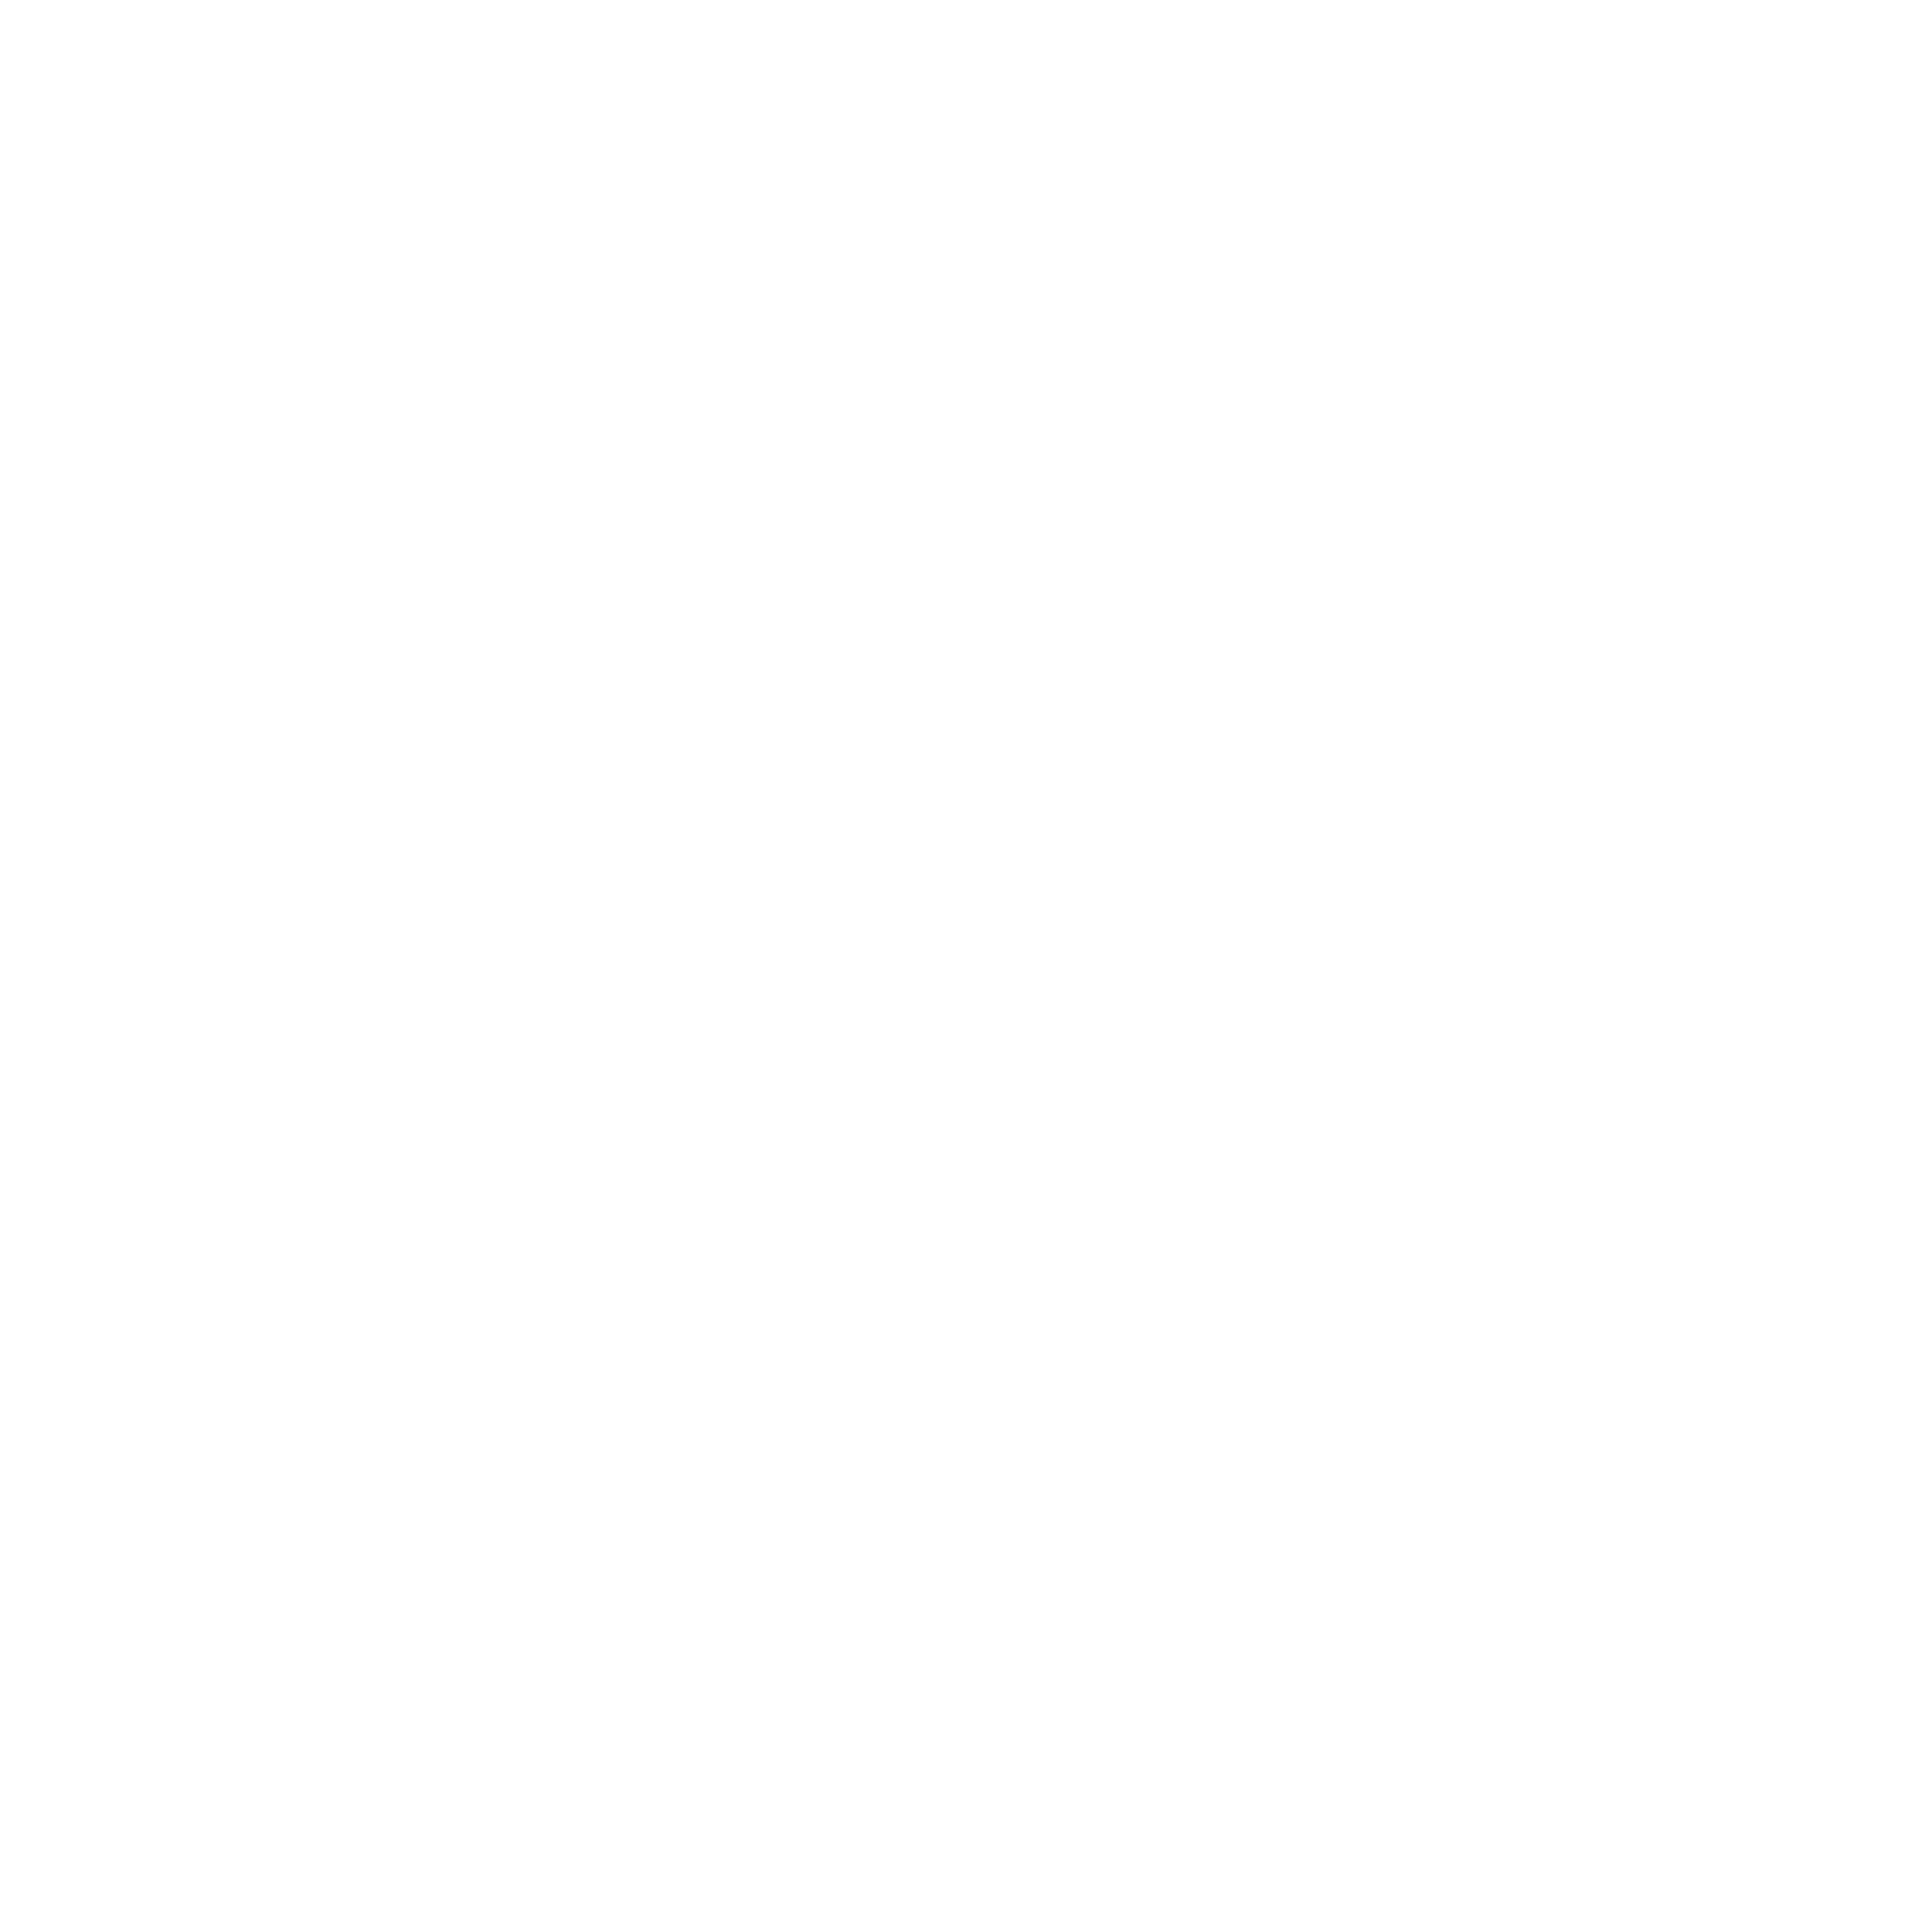 Mad Sun Spray Tans by Marnie